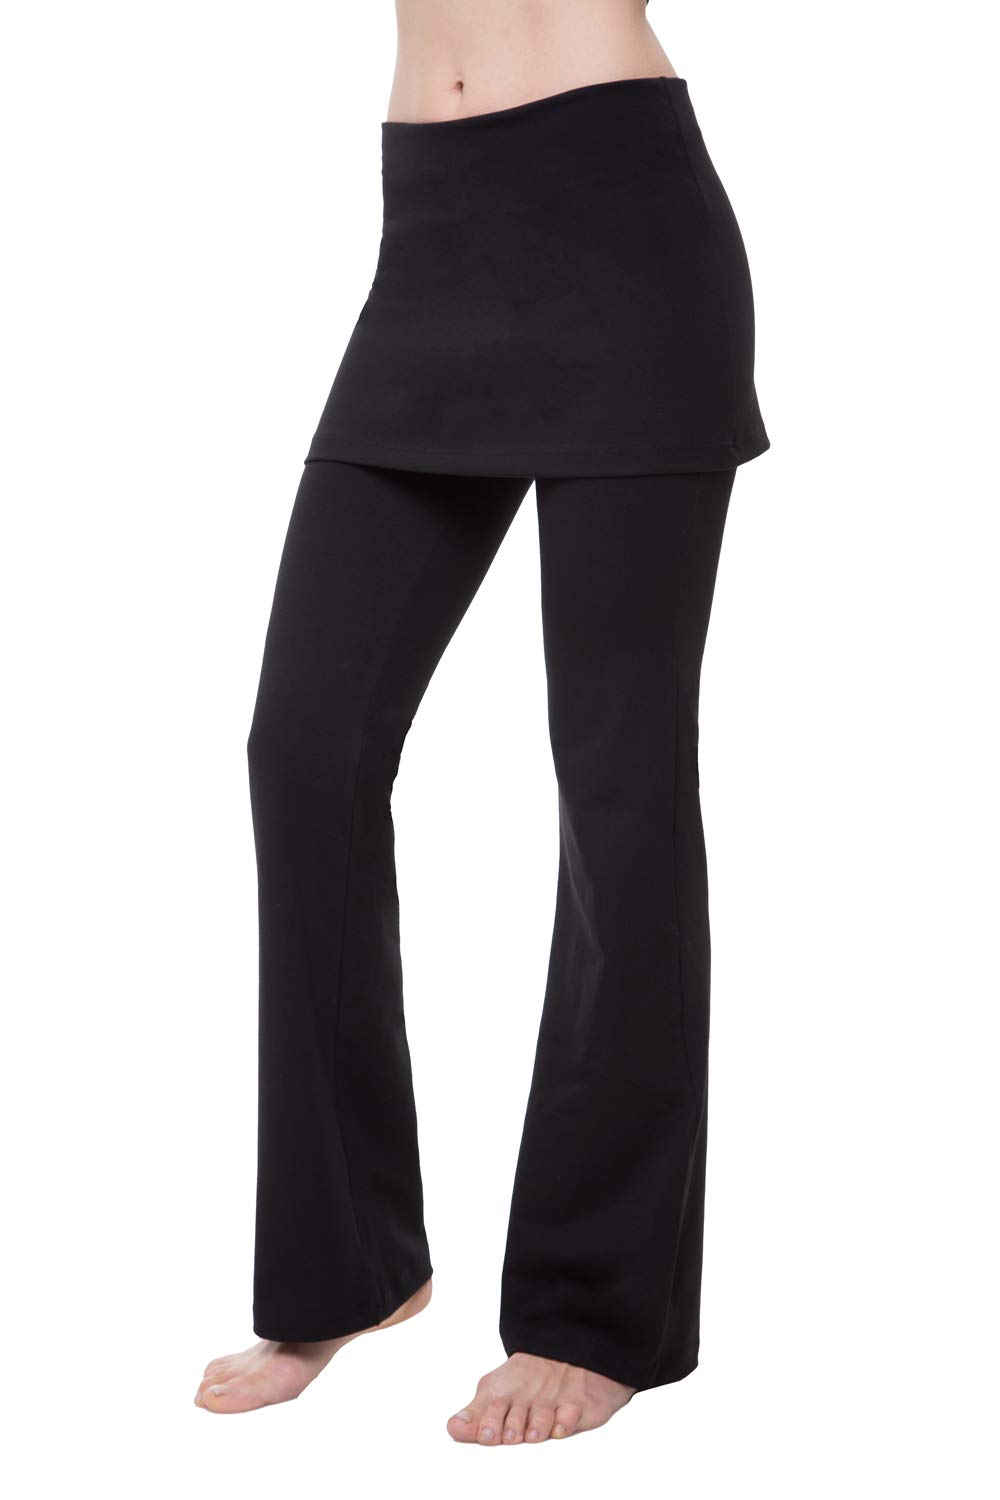 Nirlon Women's Capri Yoga Pants 7/8 Length Sides Pockets High Waist Workout  Leggings 22 Inseam (S, Black) : : Clothing, Shoes & Accessories